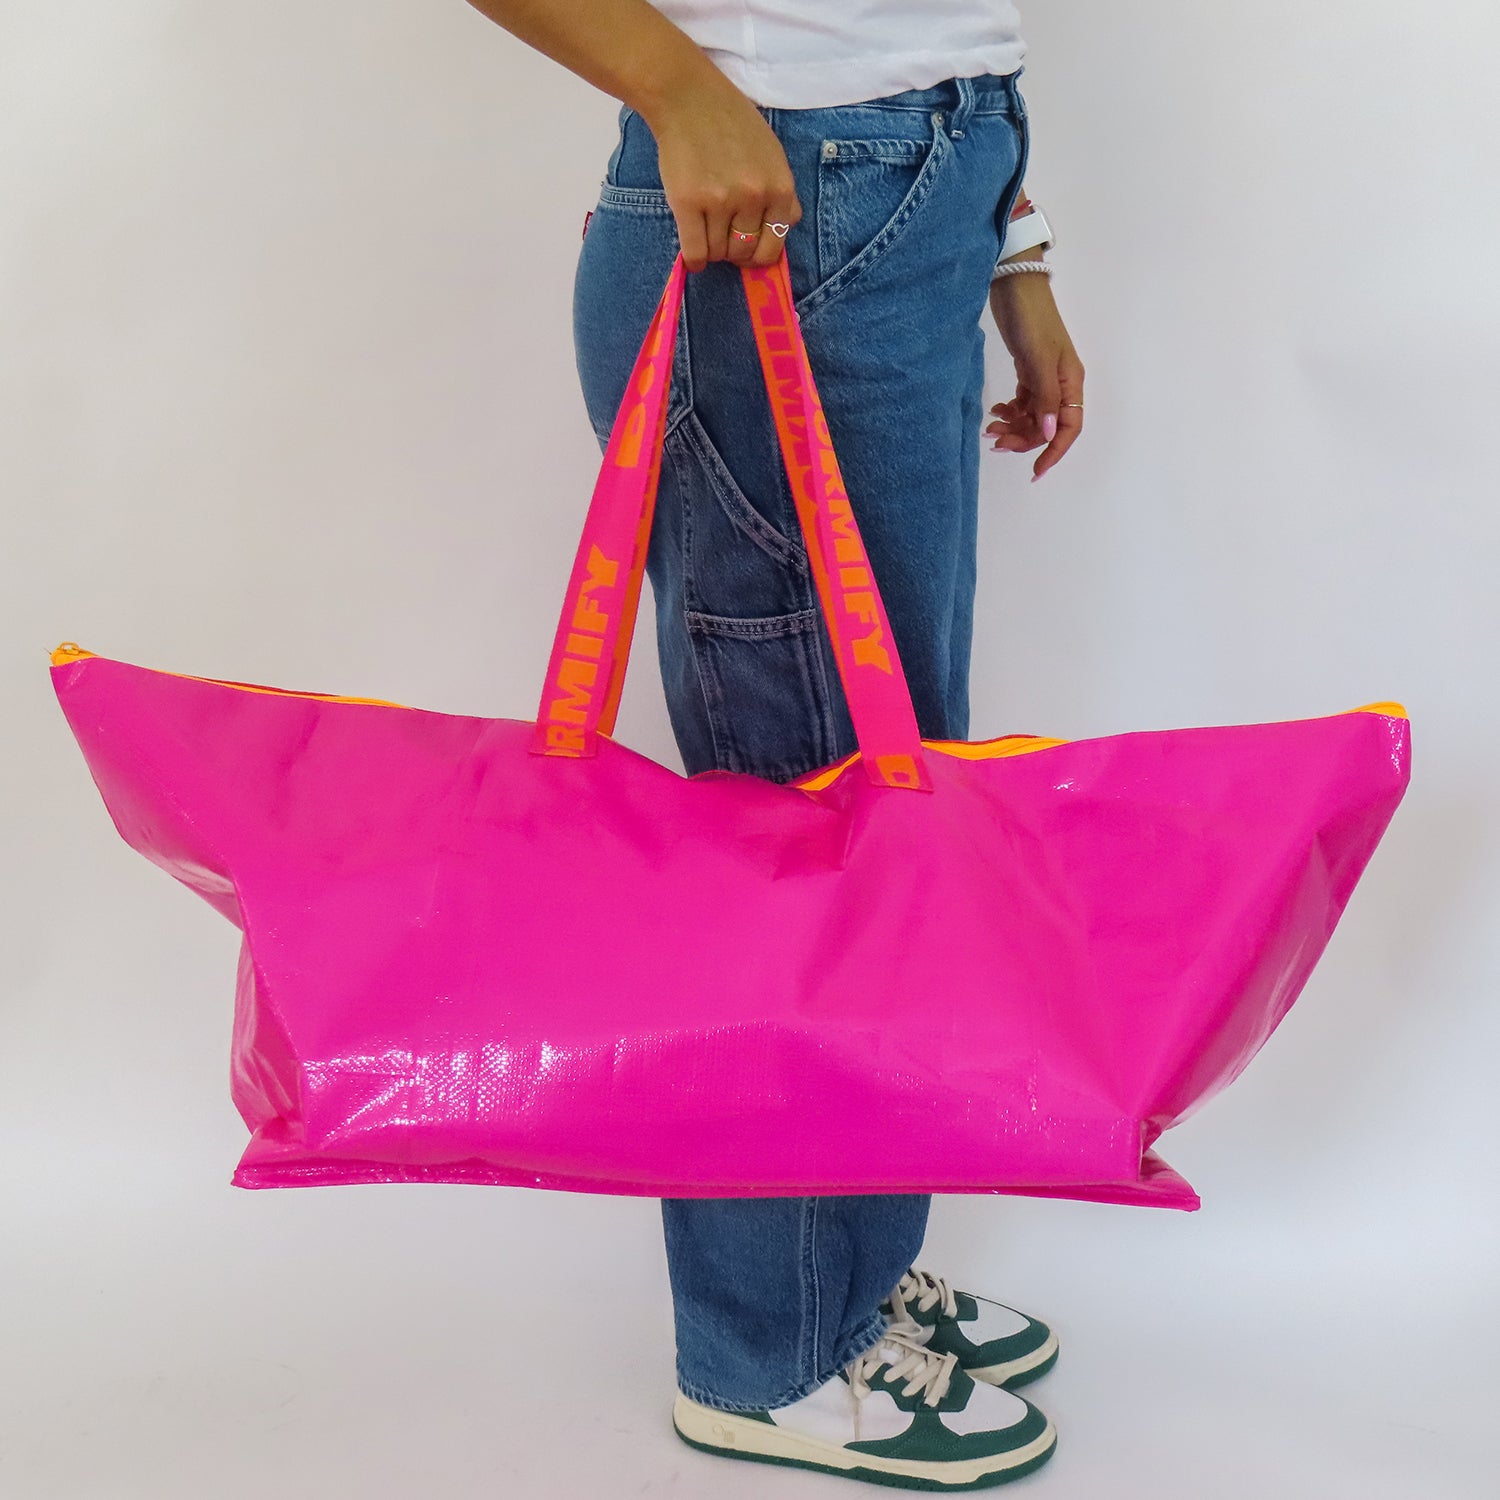 Dormify Storage Tote Bag  Dorm Essentials - Ikea Bag Alternative